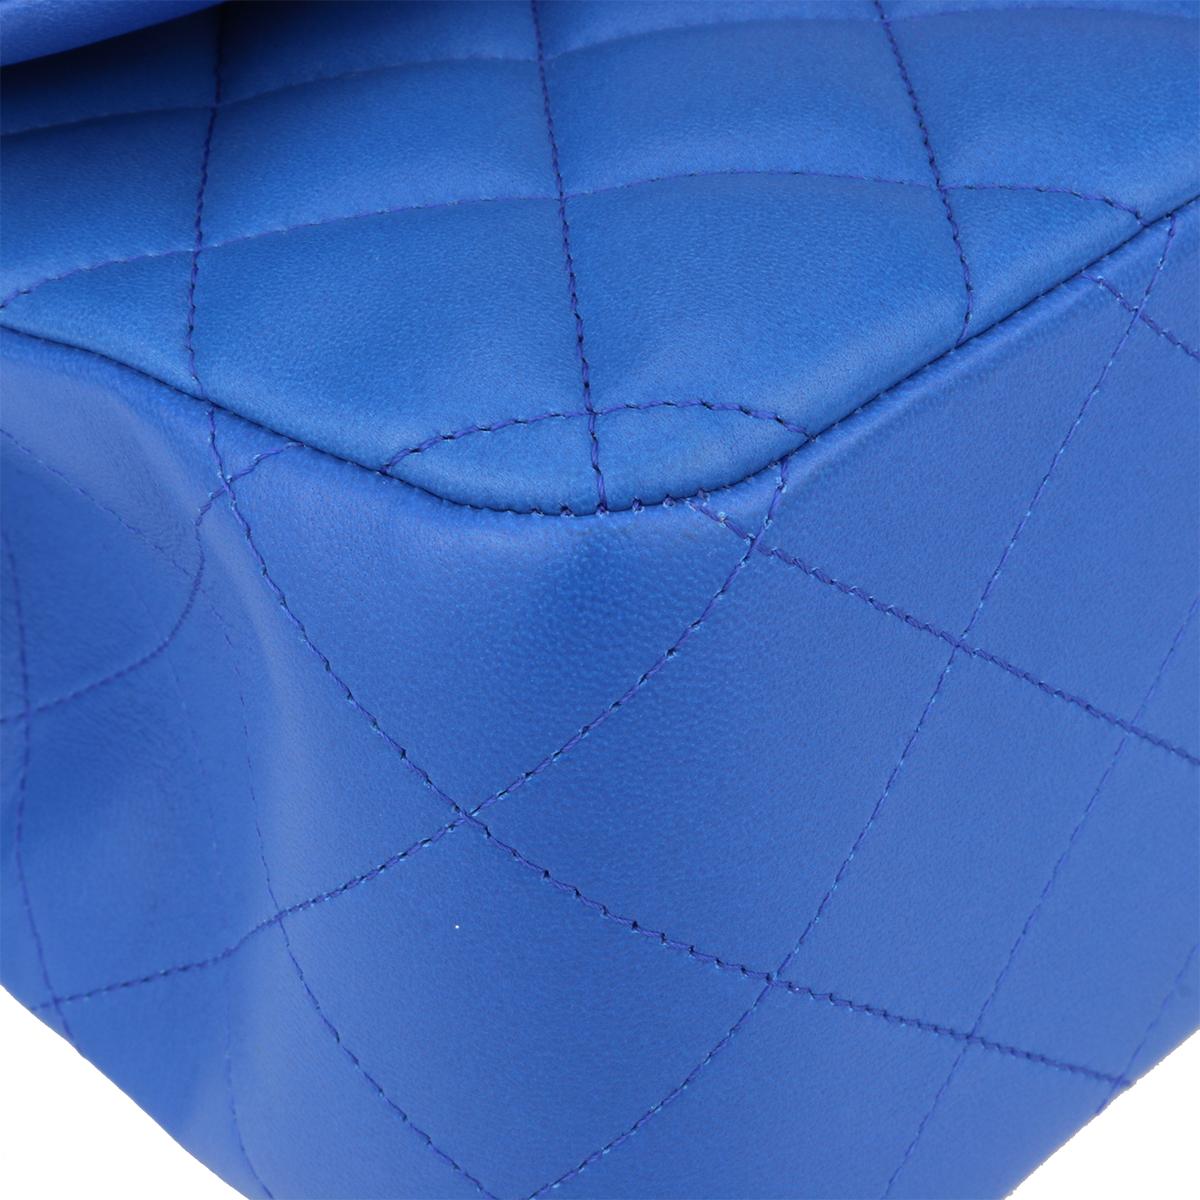 CHANEL Double Flap Jumbo Bag Blue Lambskin with Light Gold Hardware 2016 1